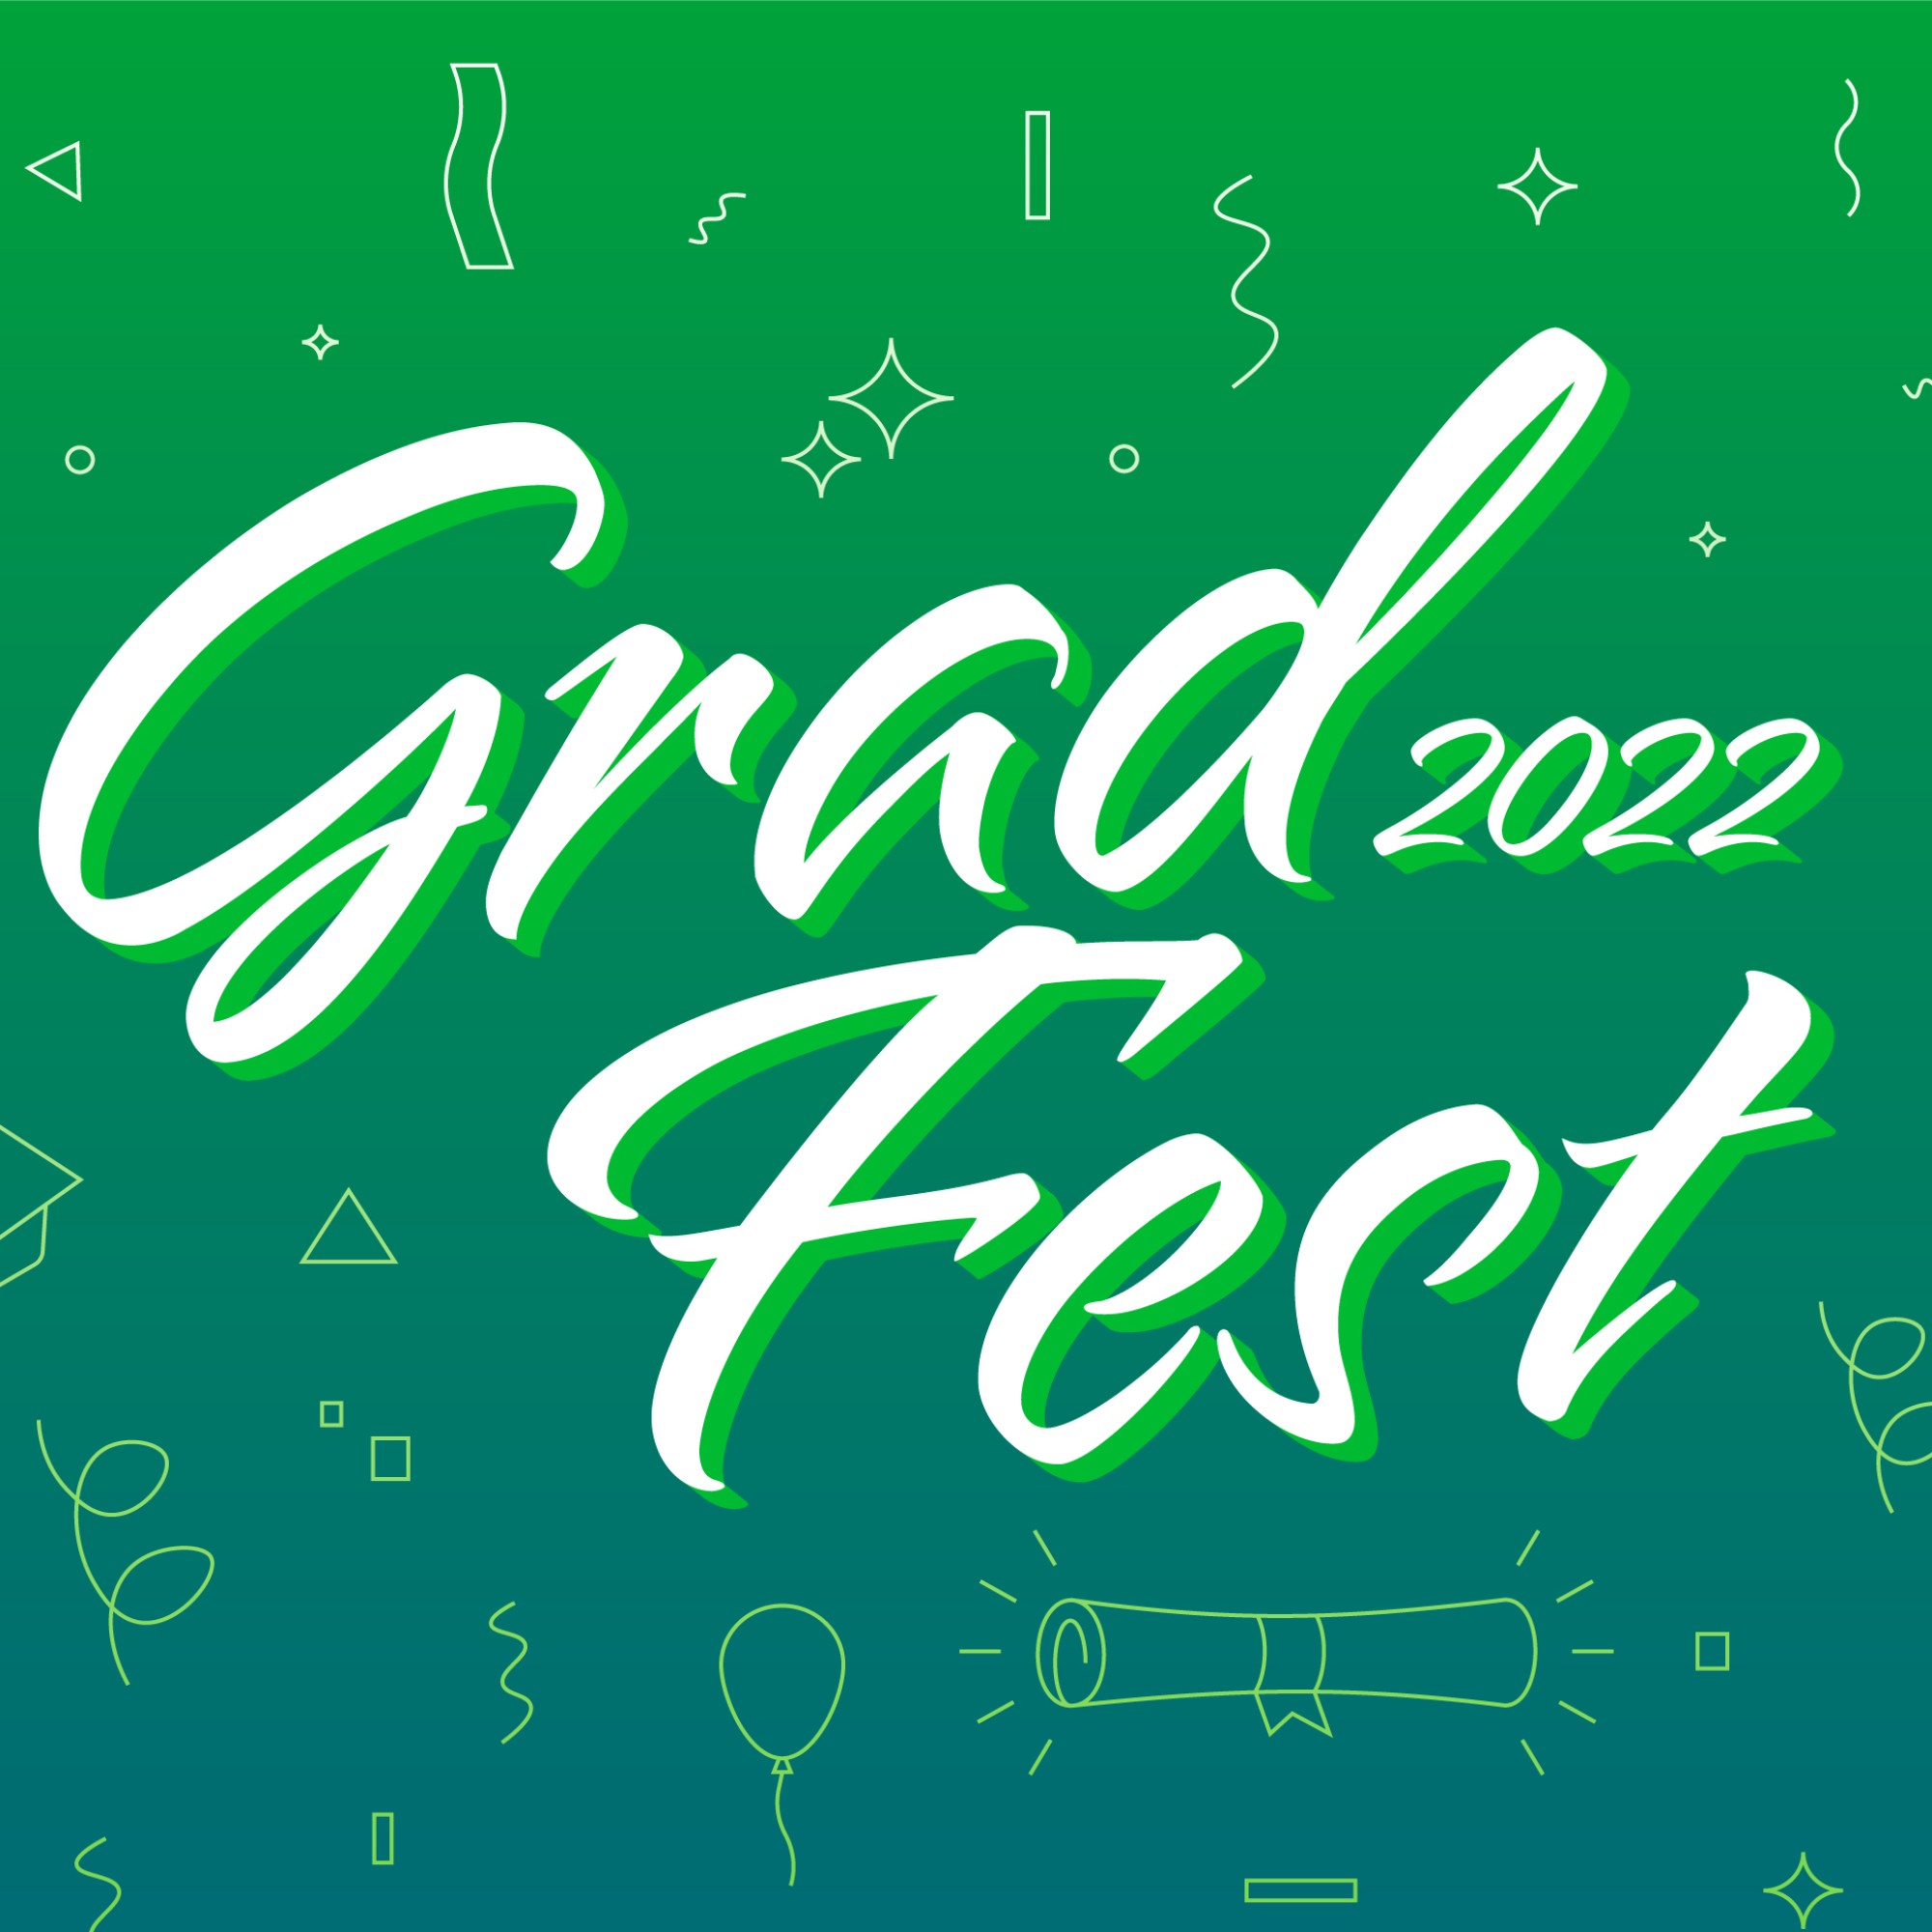 Grad Fest 2022